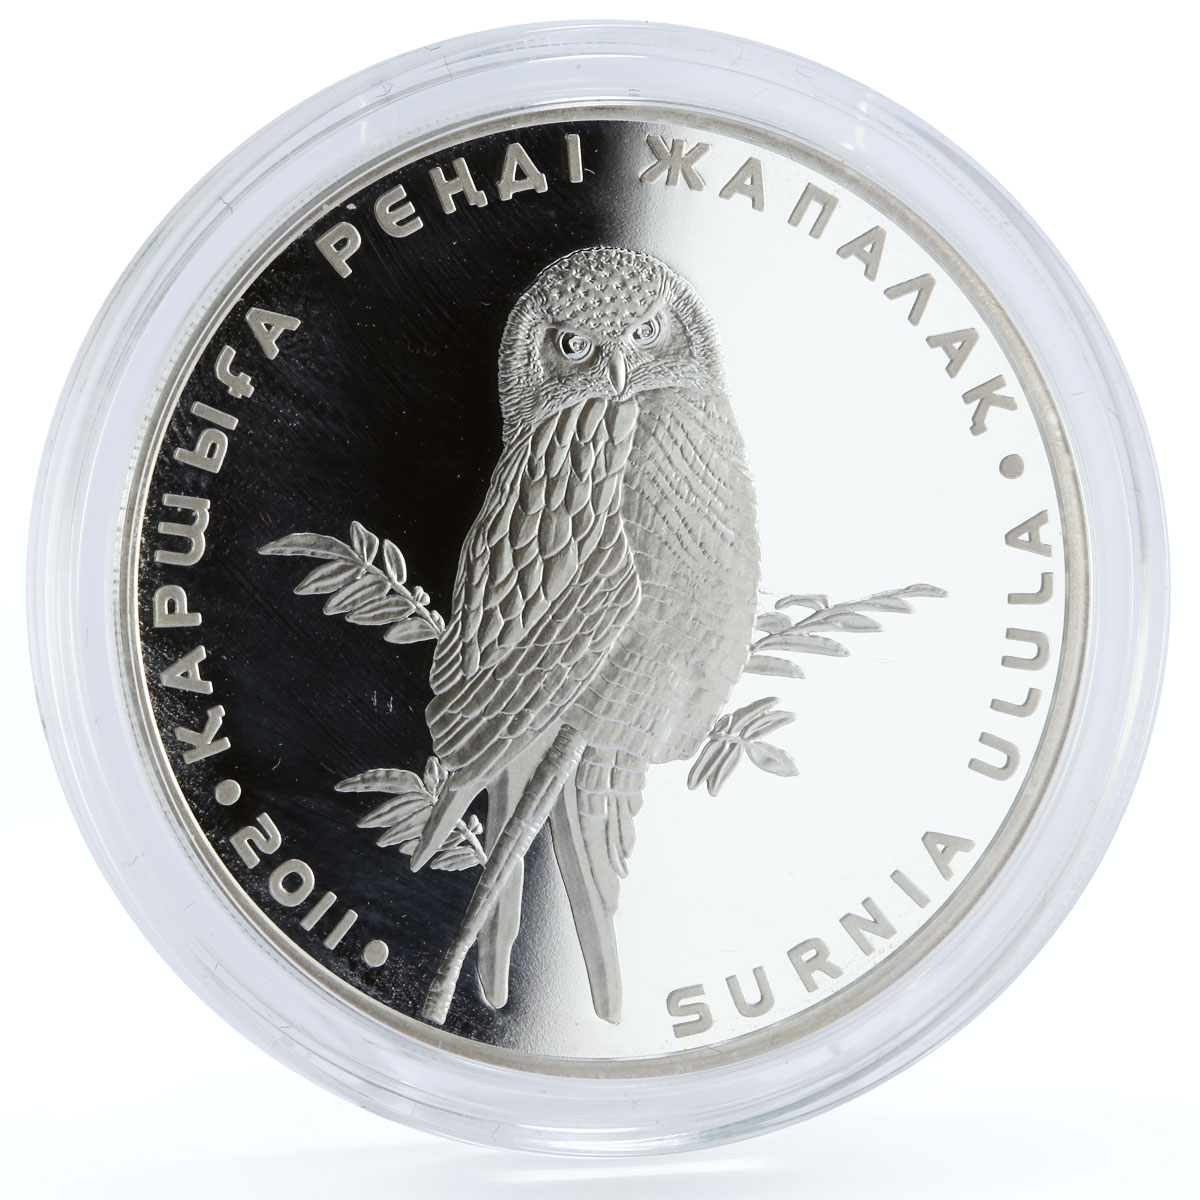 Kazakhstan 500 tenge Endangered Wildlife Hawk Owl Bird Fauna silver coin 2011